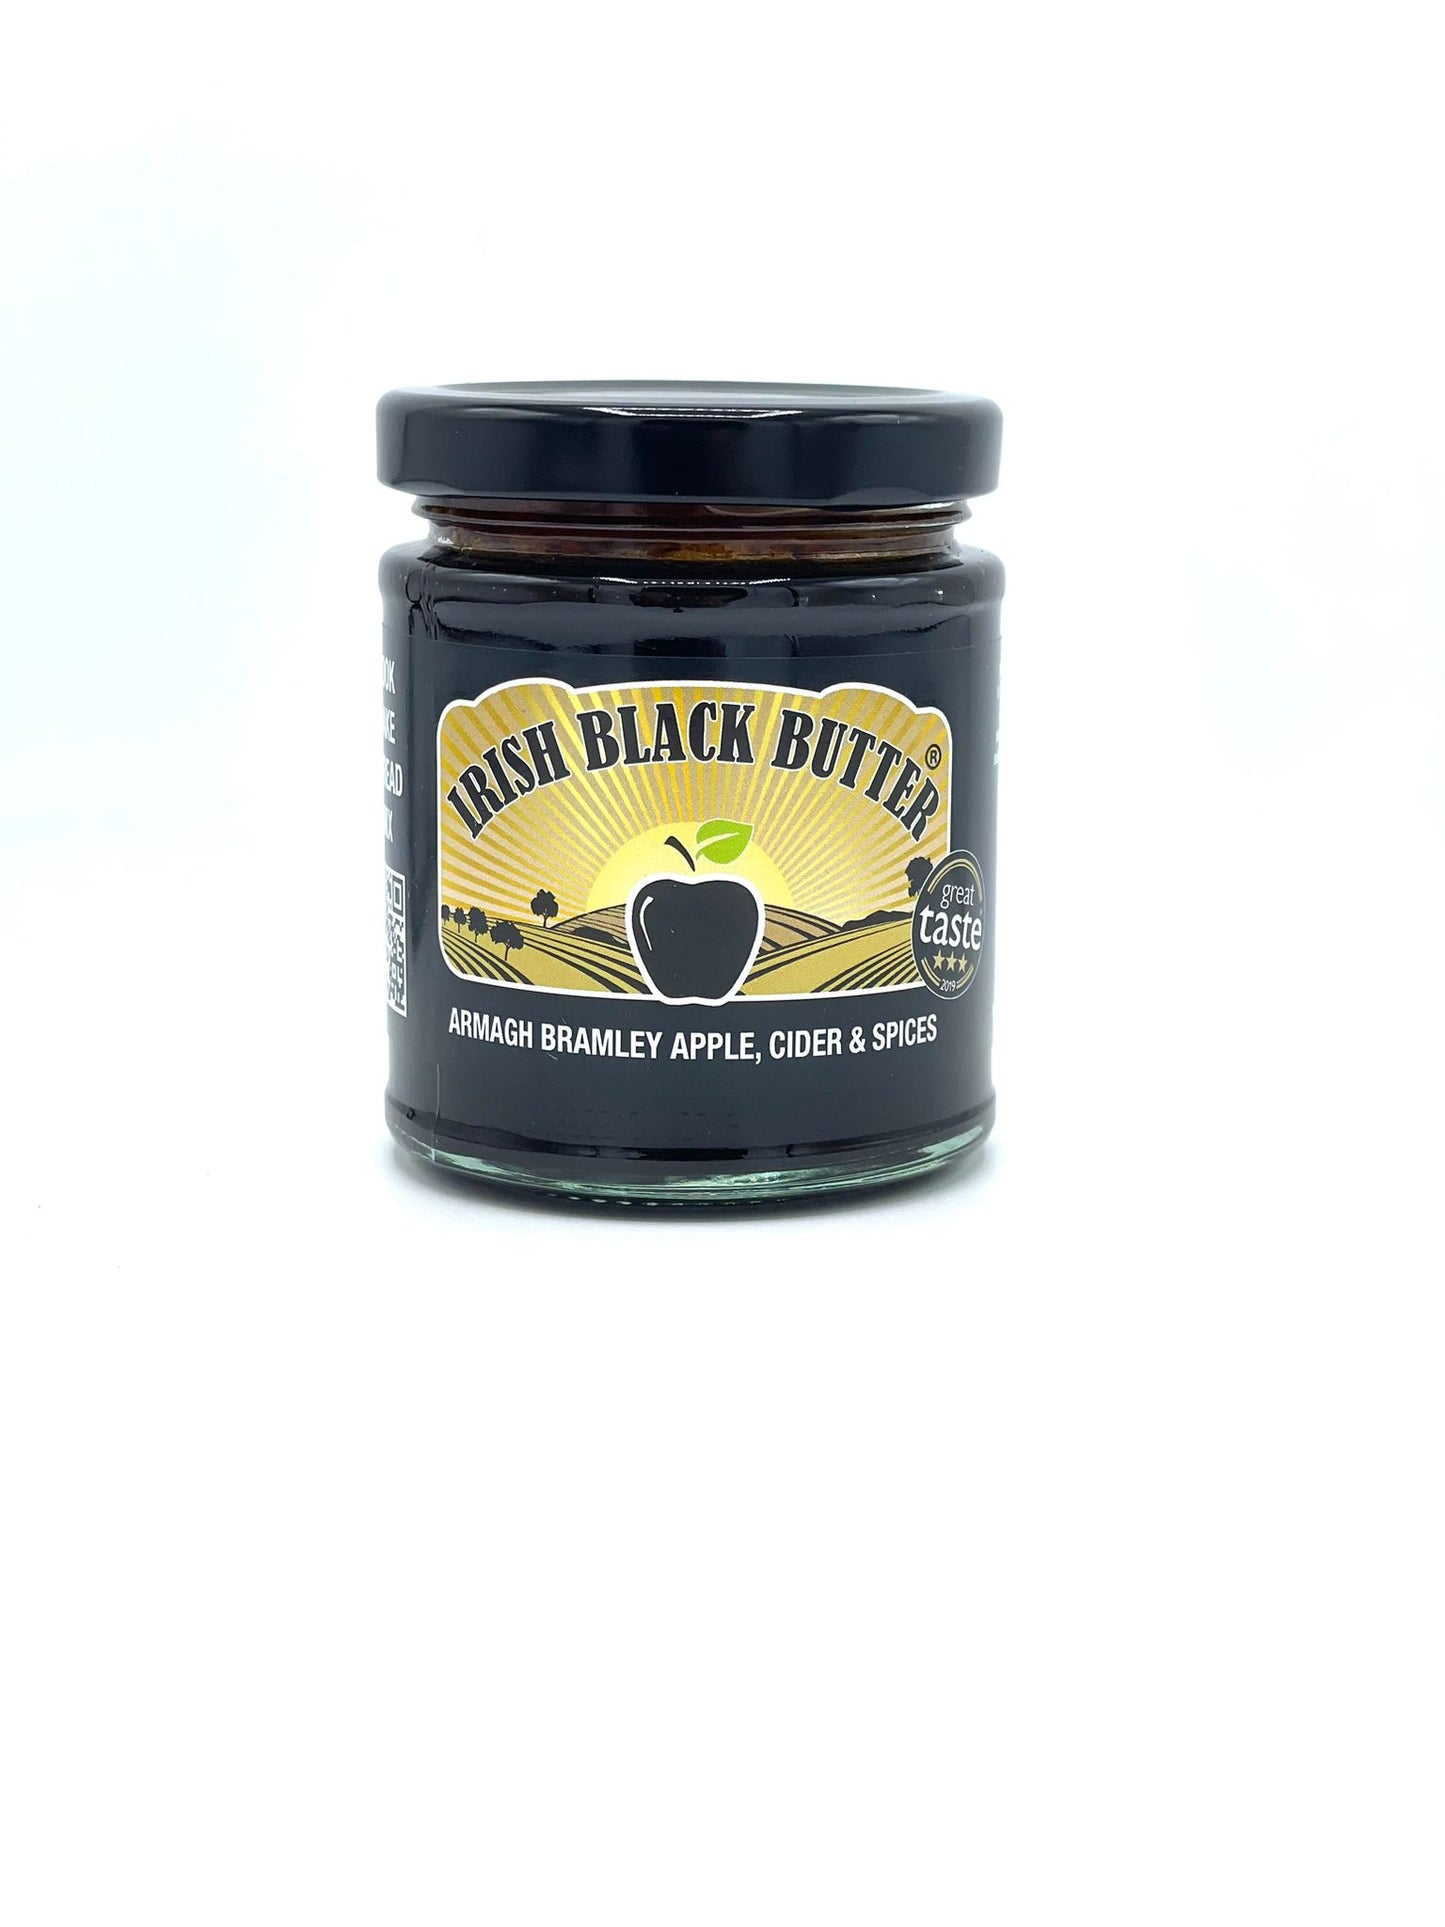 Irish Black Butter